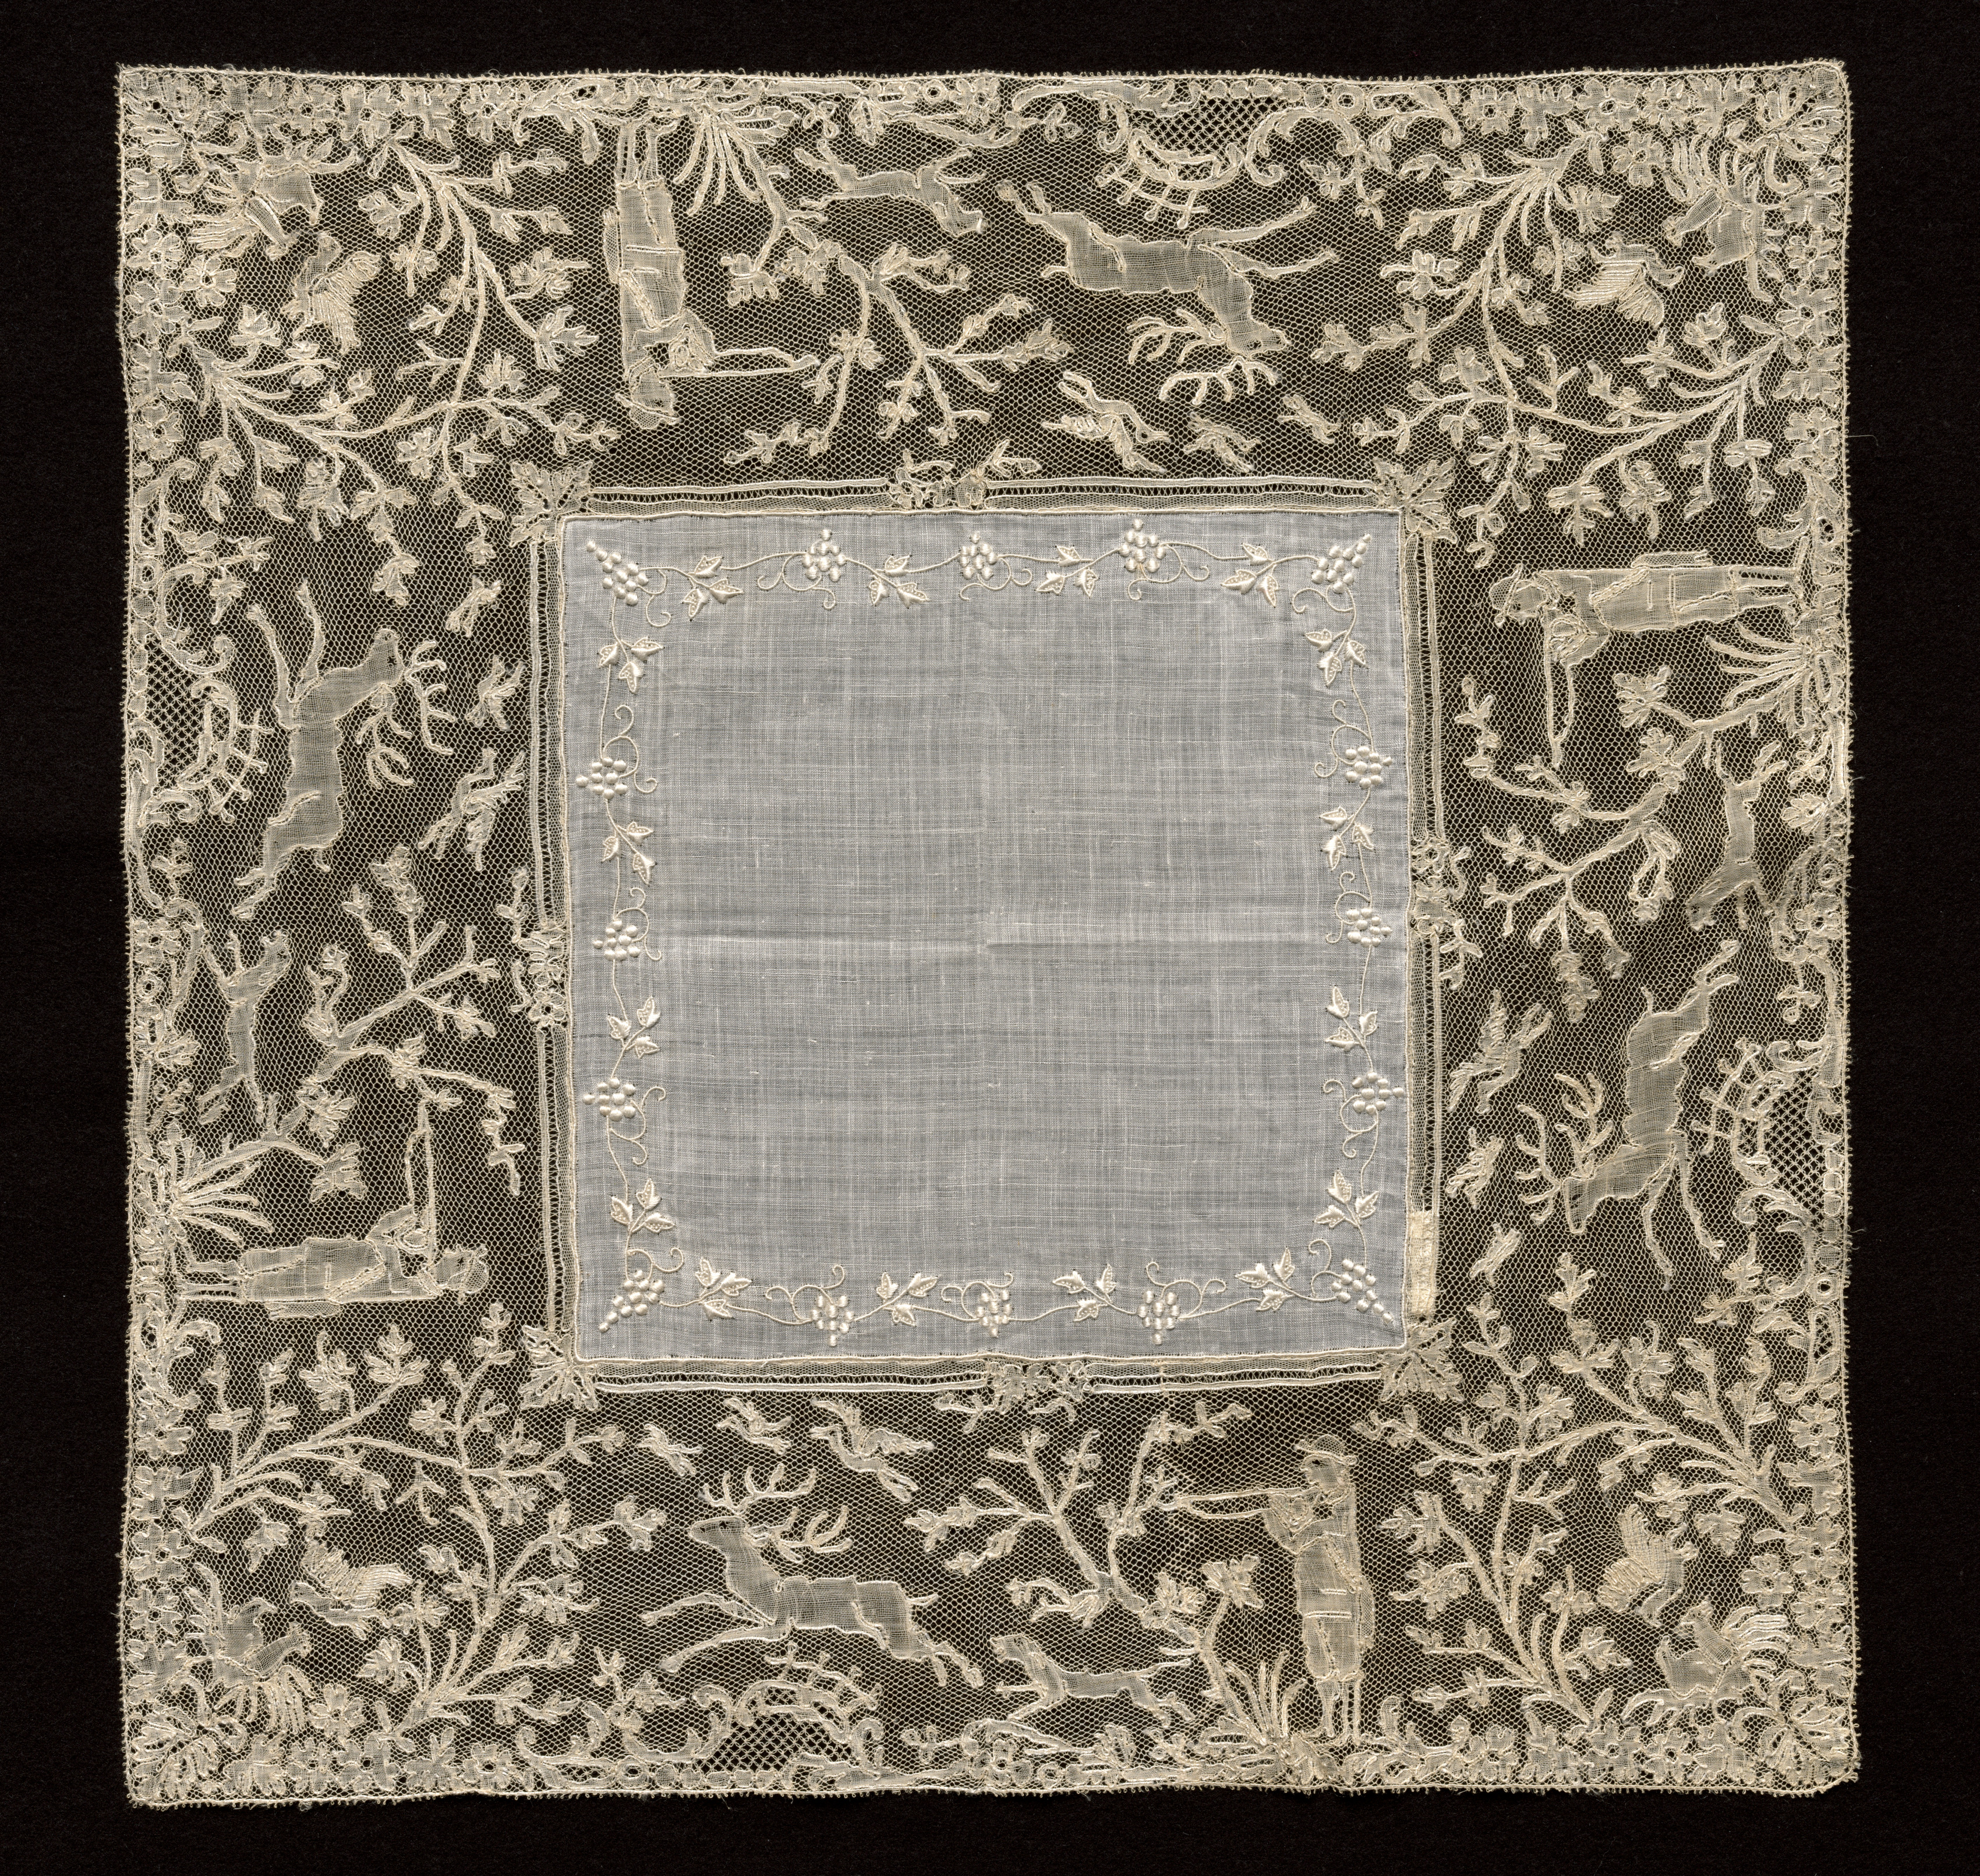 Bobbin and Embroidery Lace Handkerchief